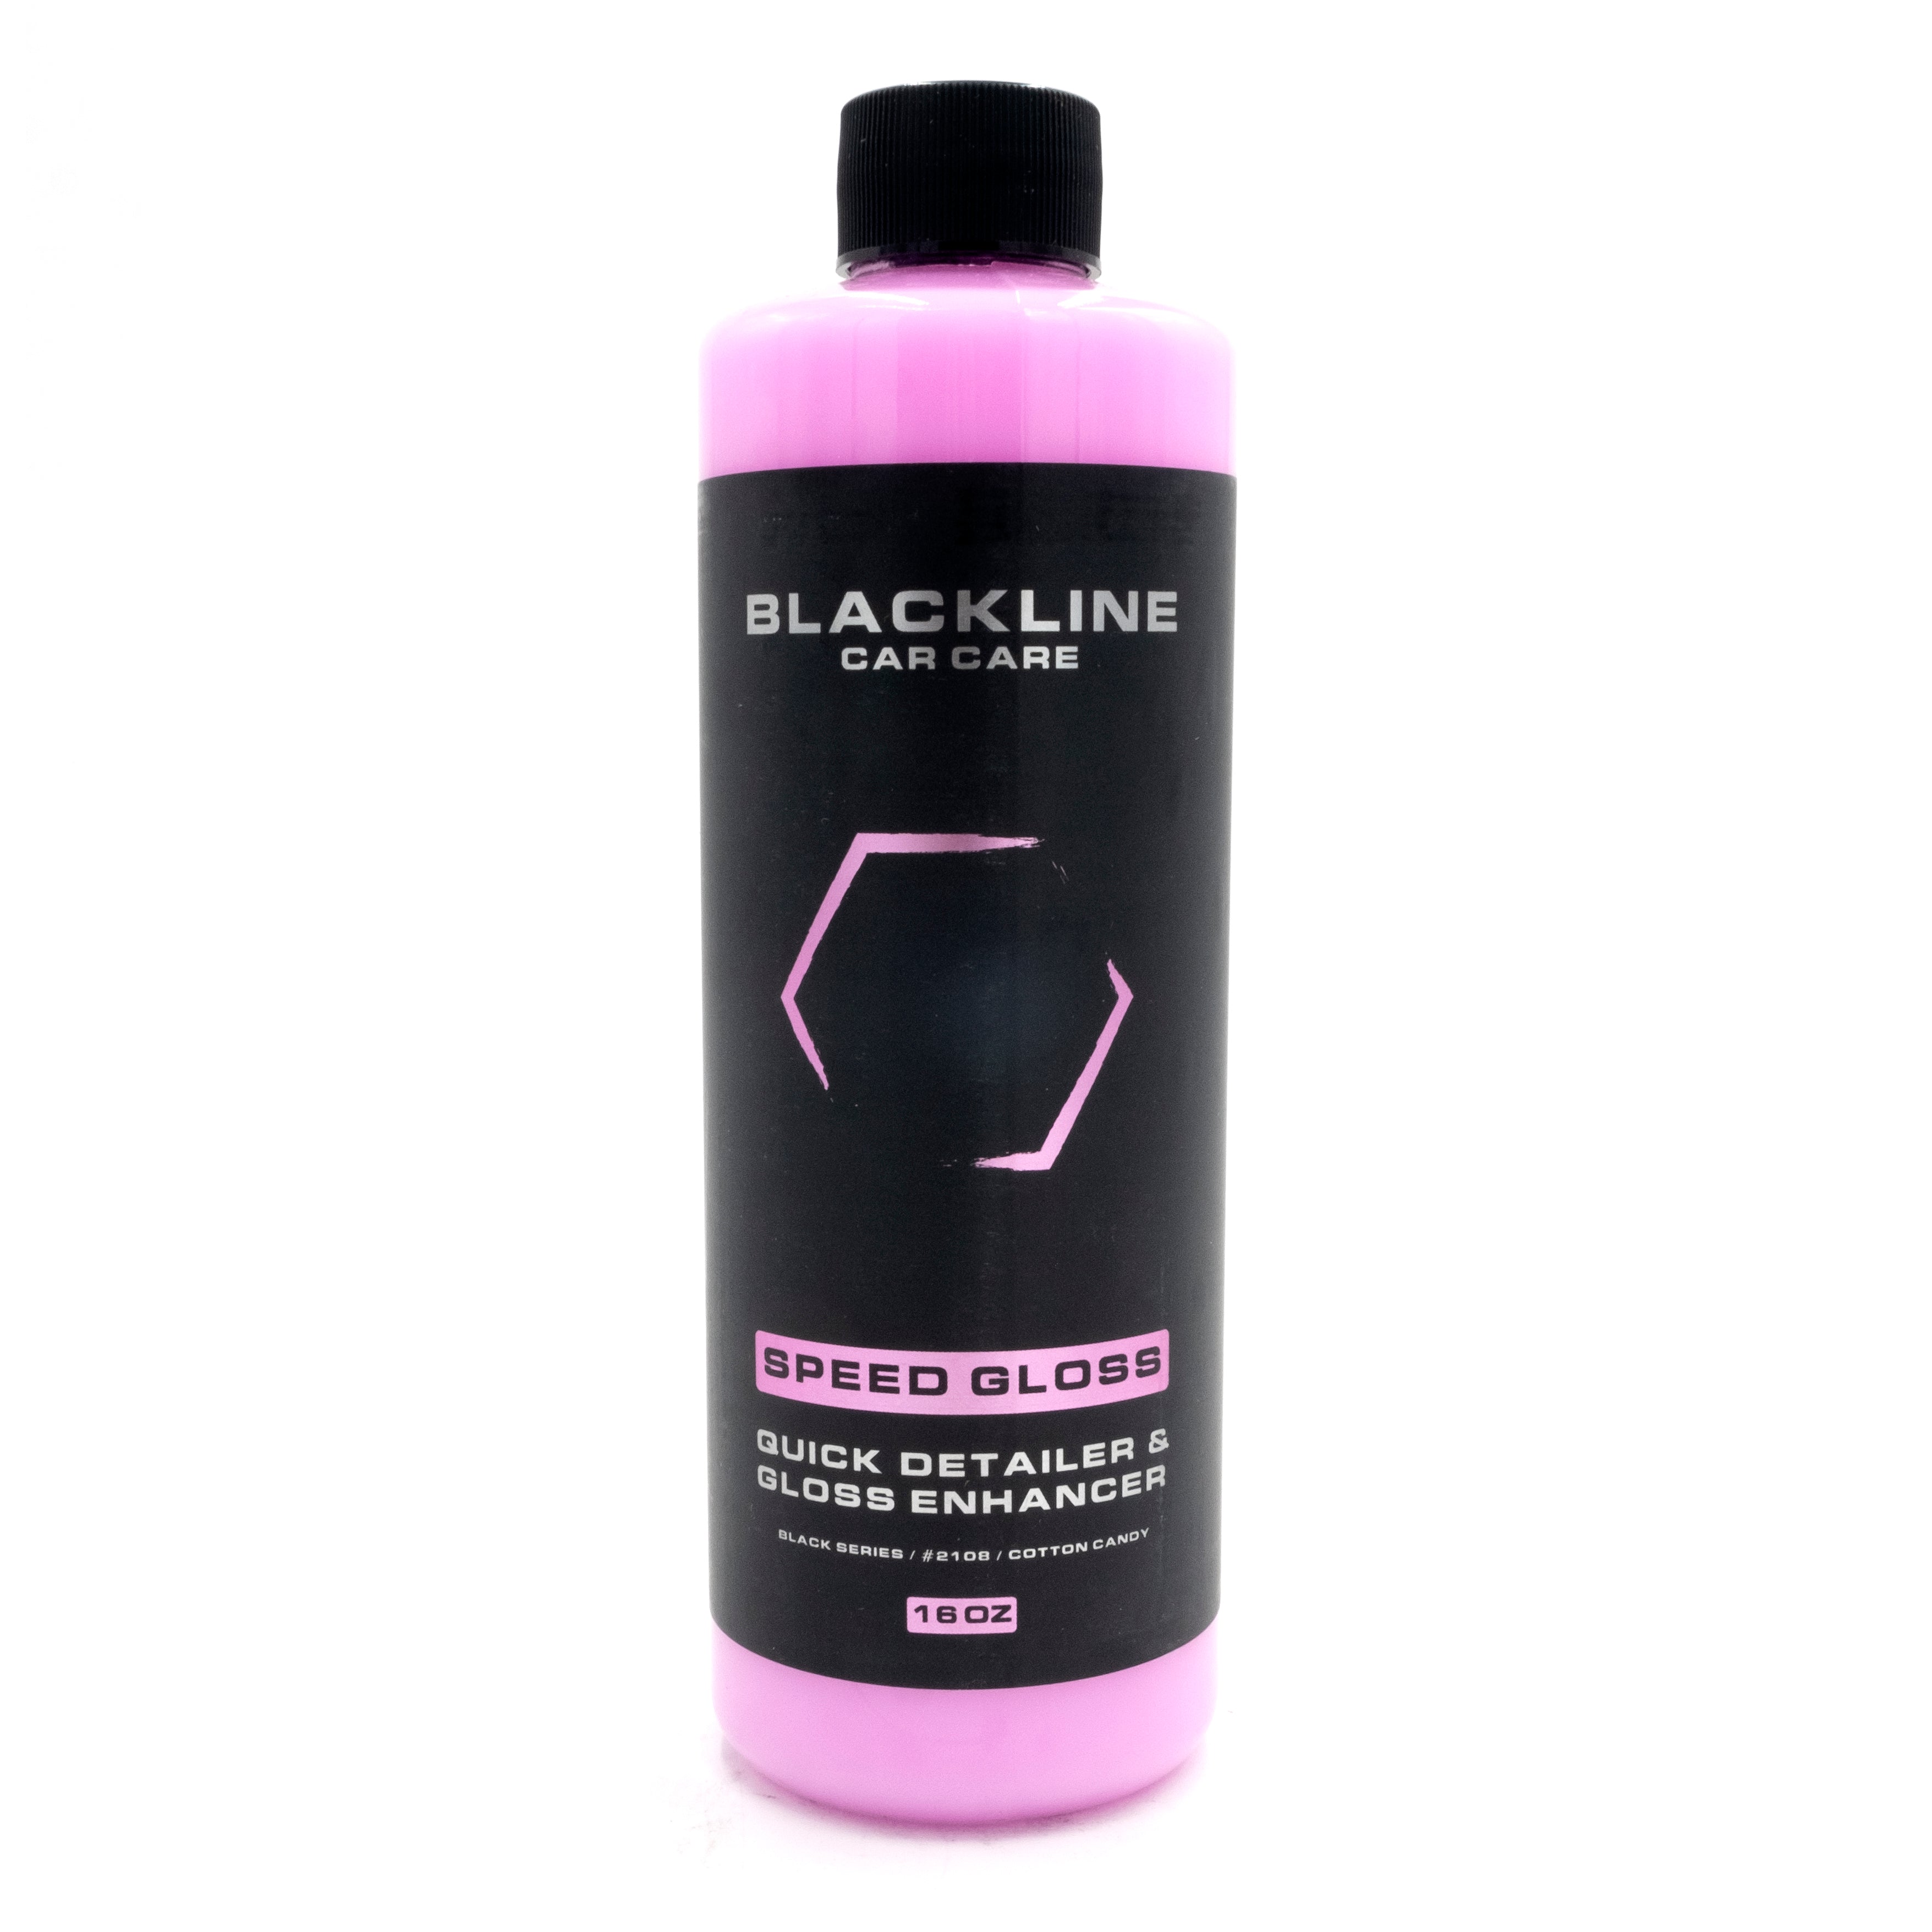 Blackline- Speed Gloss Quick Detailer